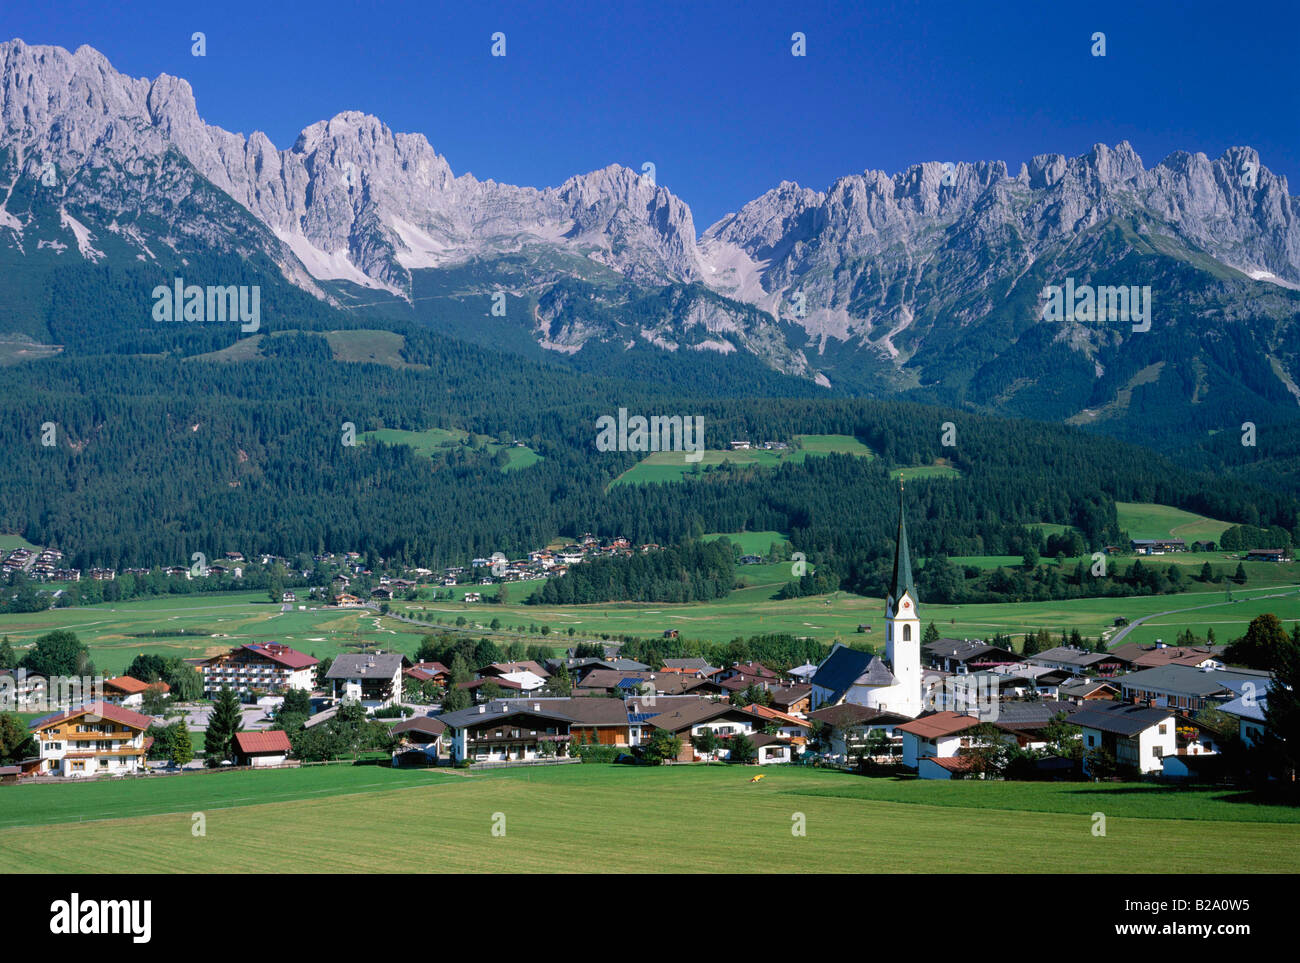 AUSTRIA Tirol Ellmau Date 05 06 2008 Ref WP B641 114629 0004 COMPULSORY CREDIT World Pictures Photoshot Stock Photo